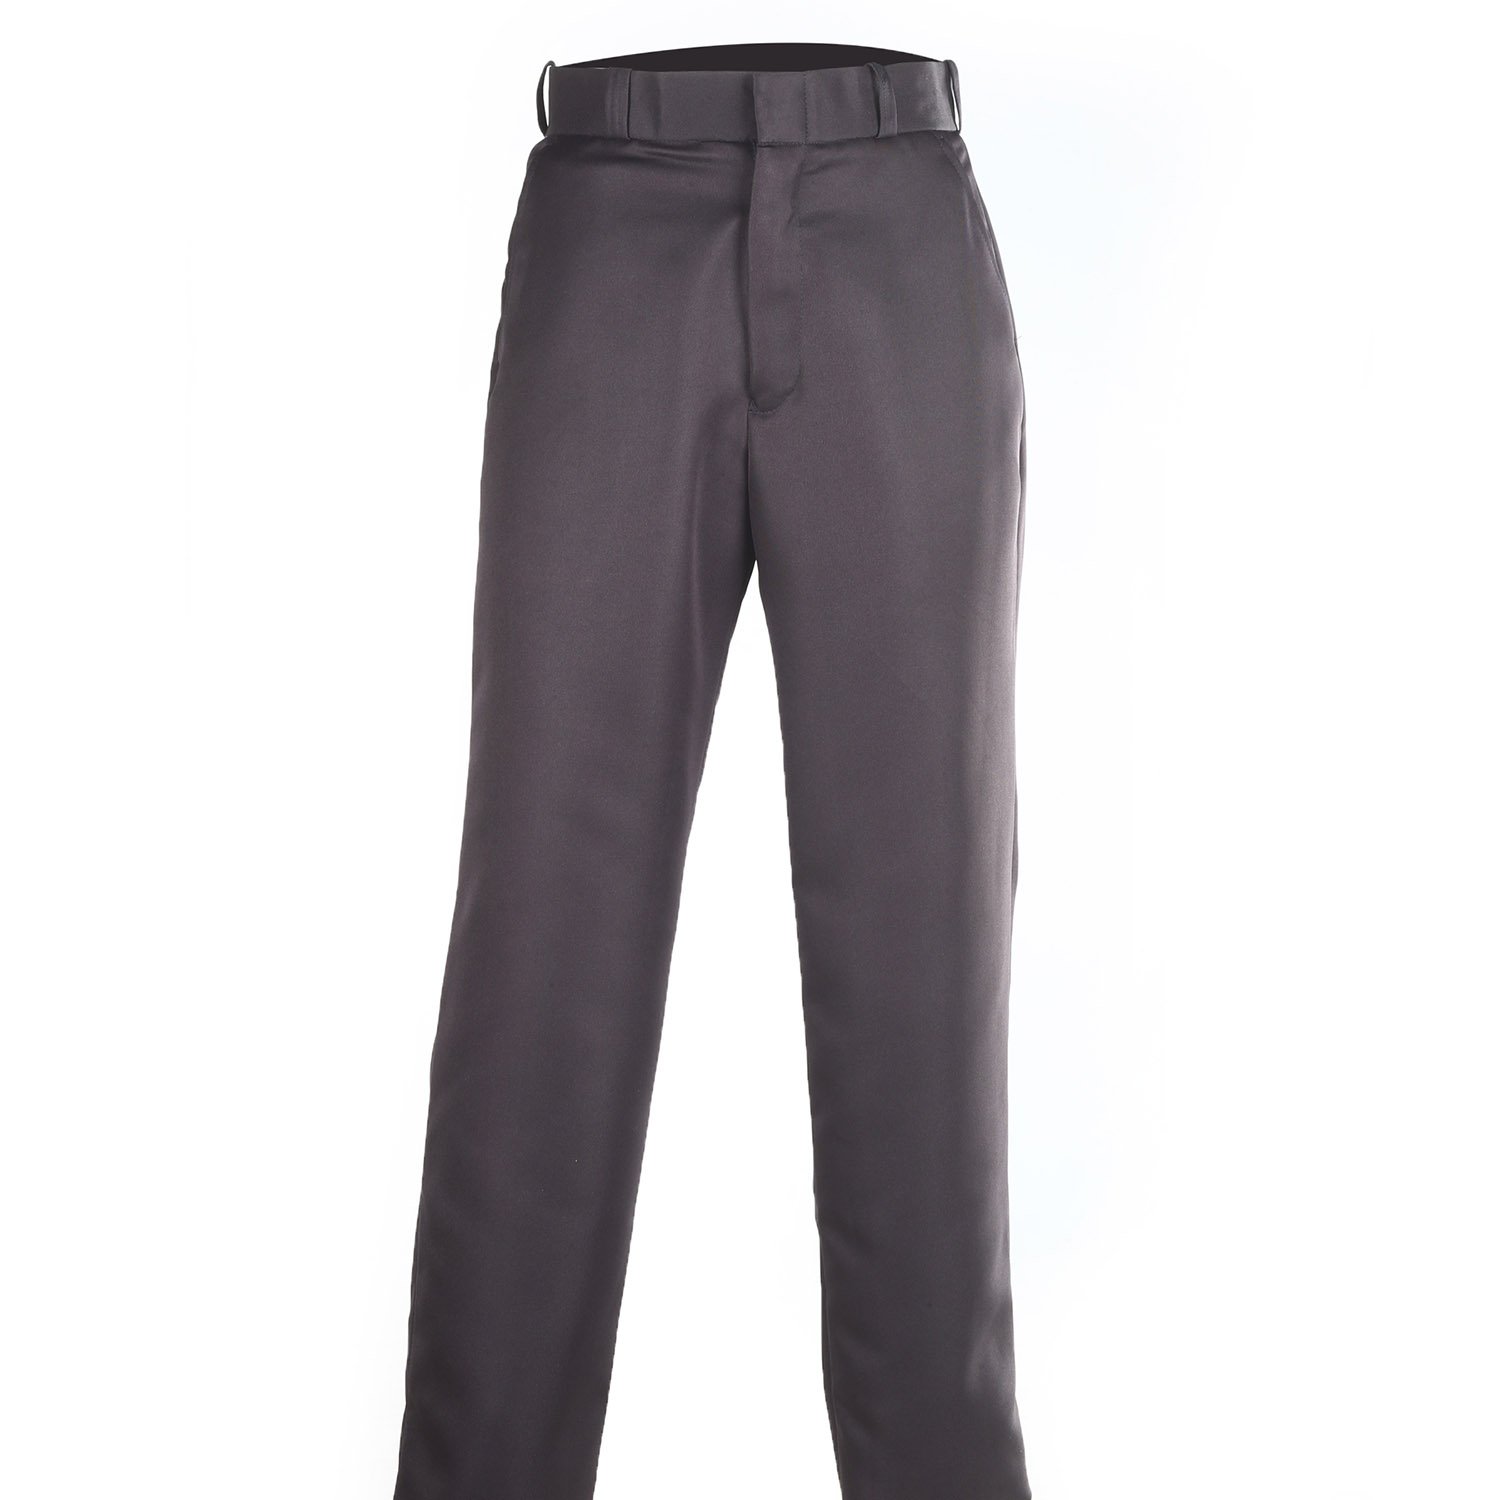 LawPro 100% Polyester Elastique Four Pocket Trousers